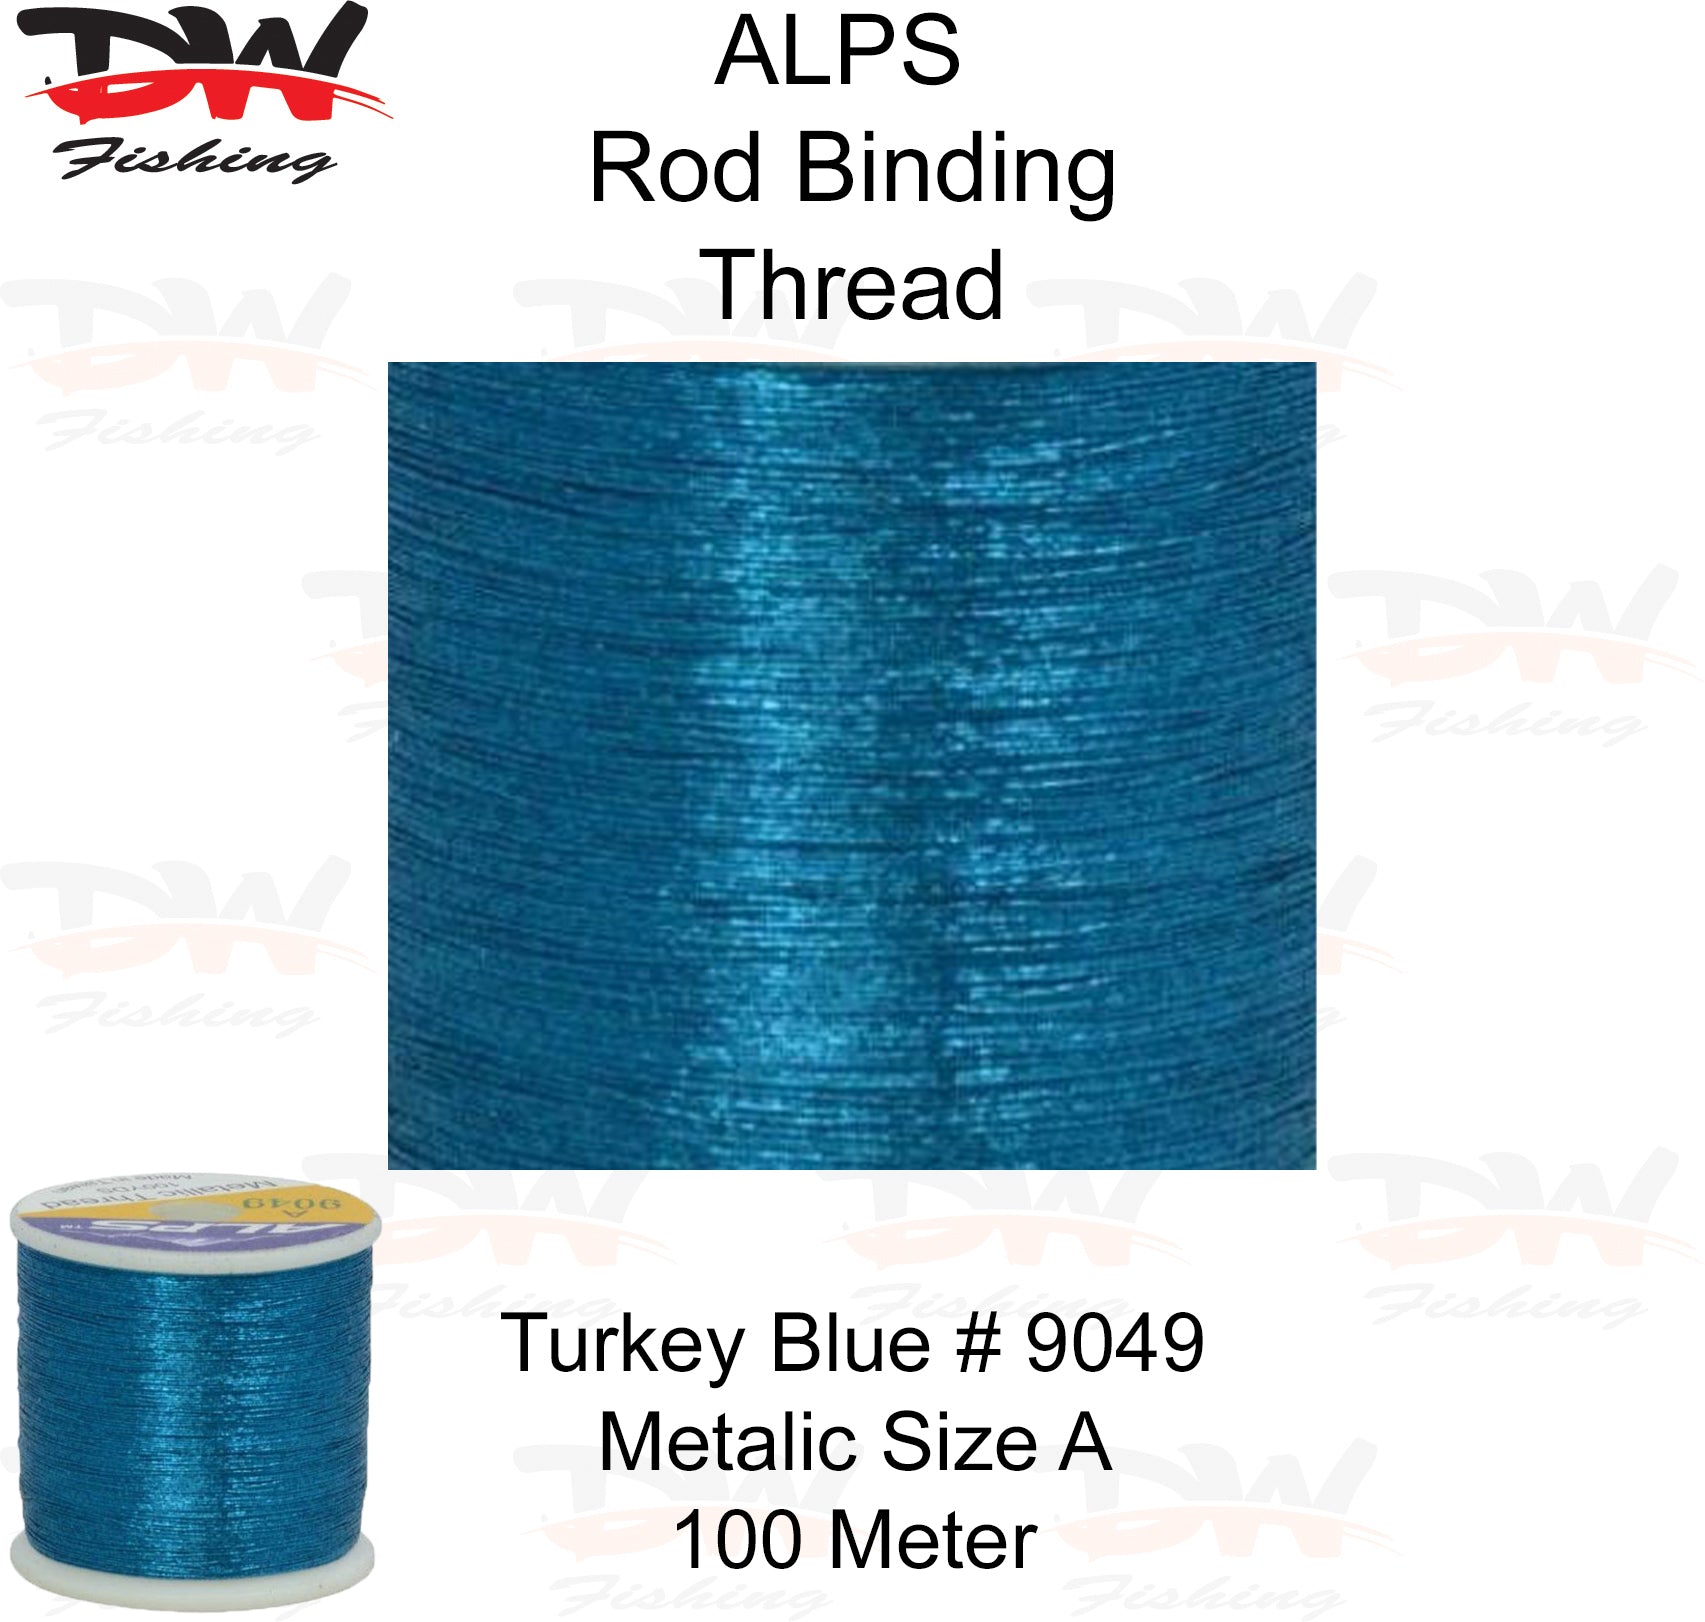 ALPS metalic rod binding thread turkey blue